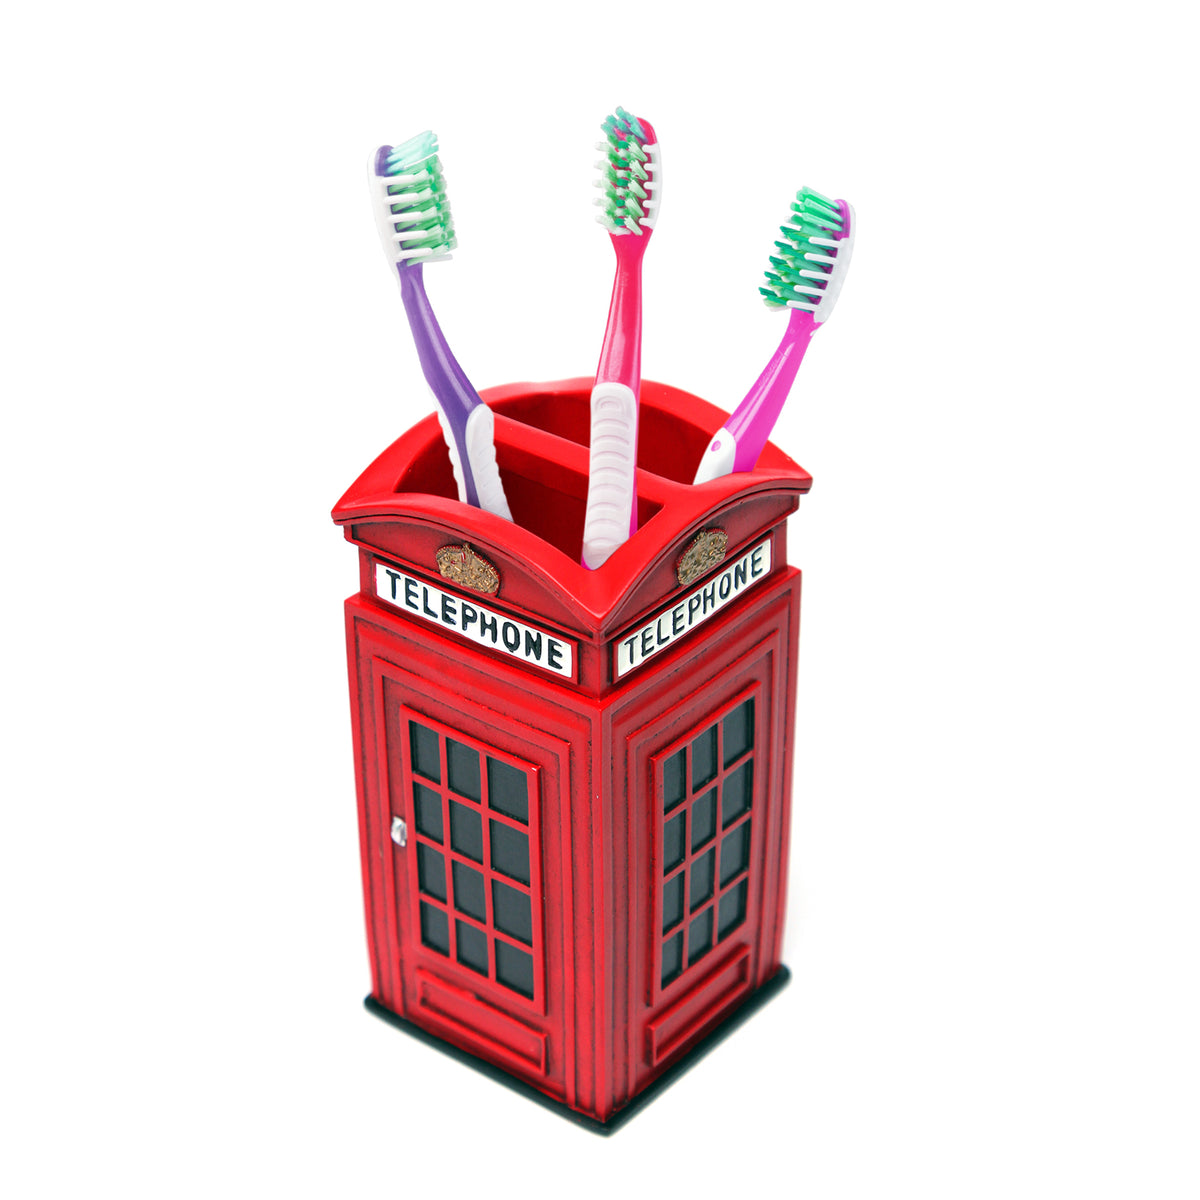 Shresmo Telephone Booth Shaped Wonder Toothbrush Holder - OnlyMat